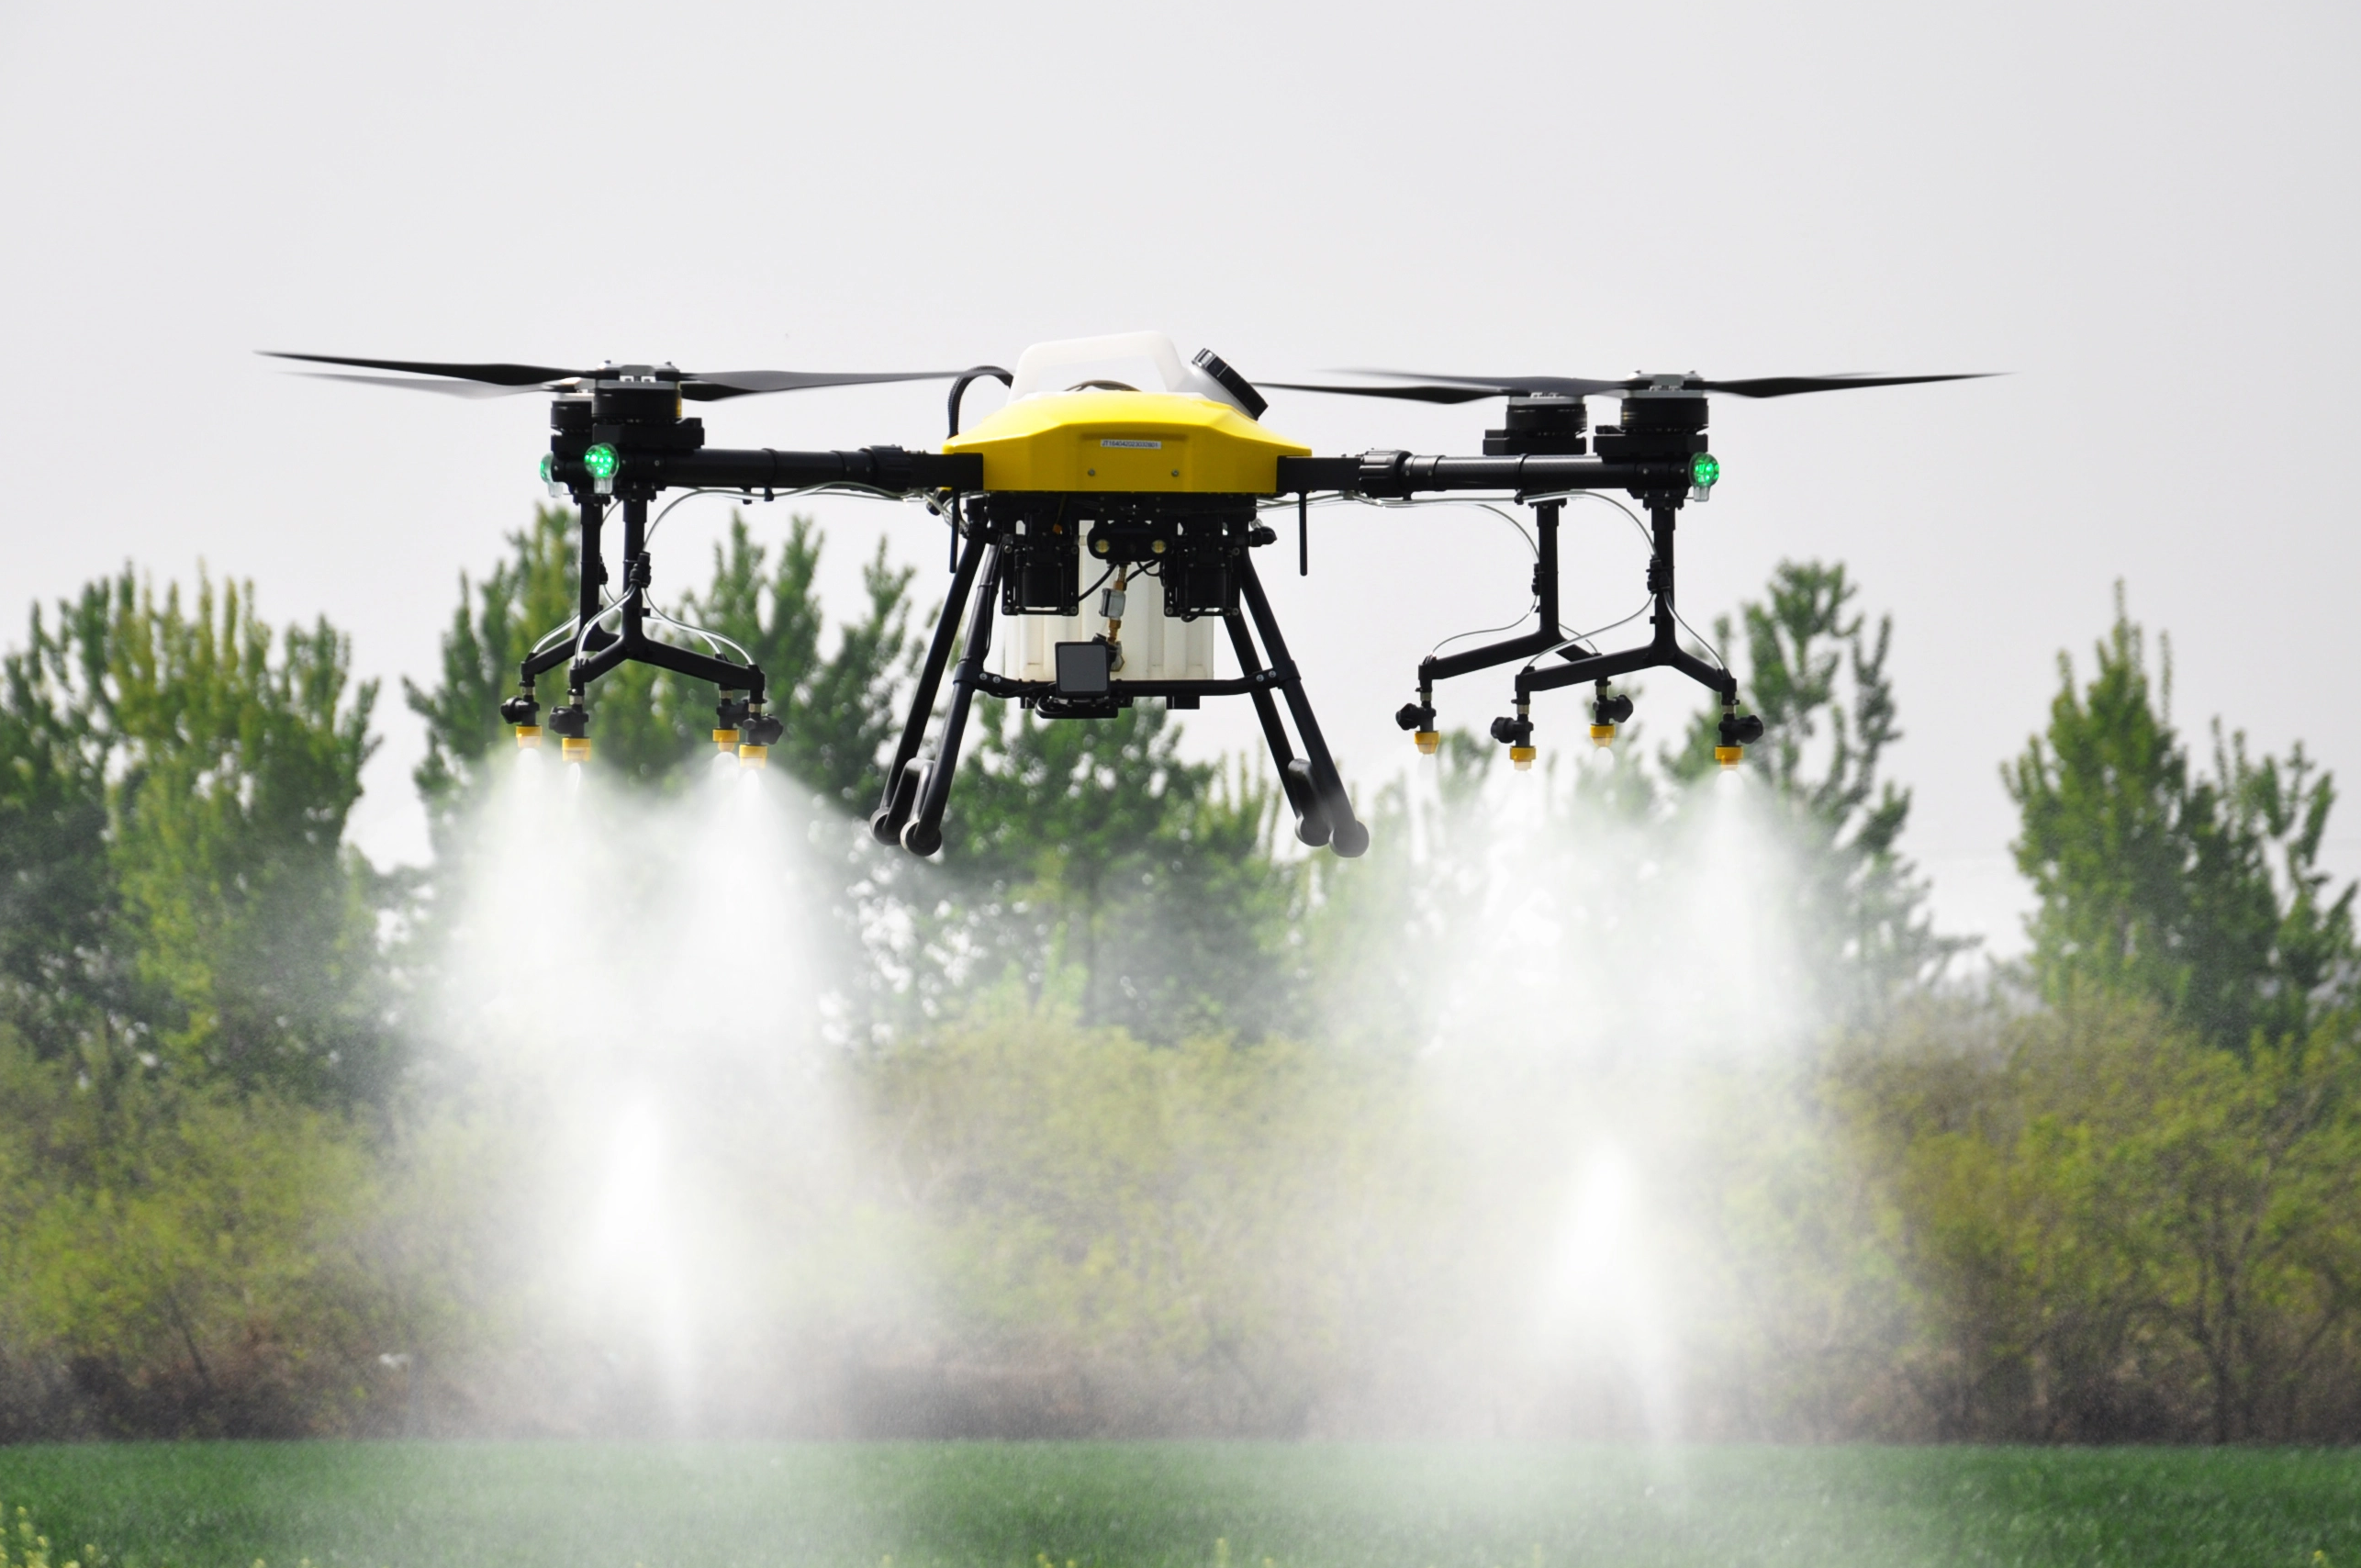 20 Liter Agriculture Sprayer Drone Uav Rack F20 Factory Direct Carbon Fiber Quadcopter Drone Frame for Spraying